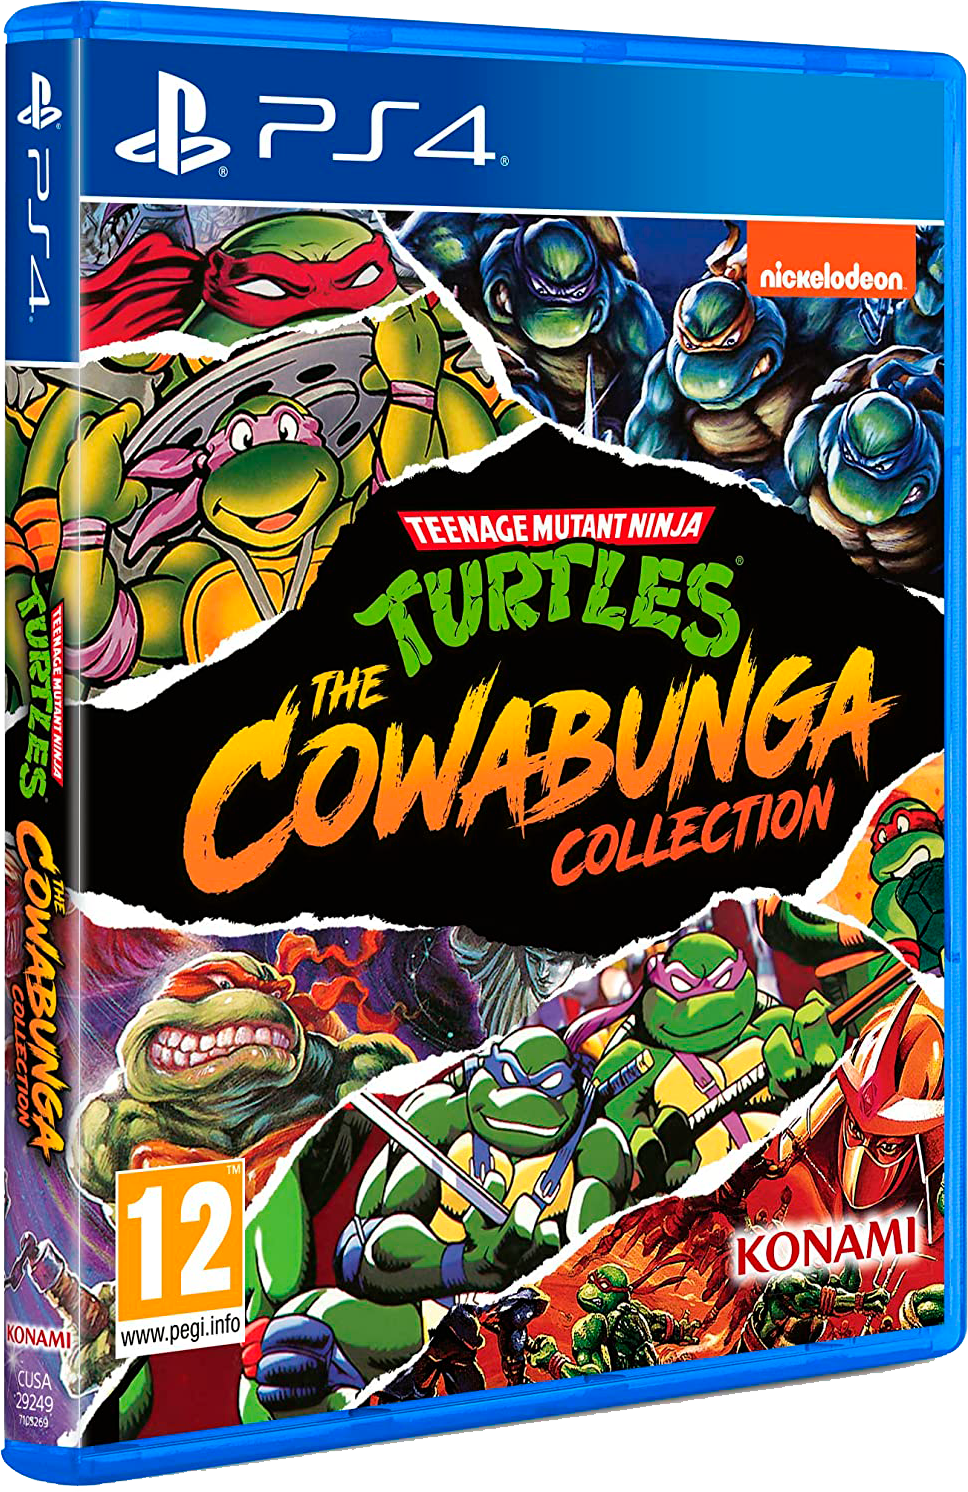 Черепашки ниндзя Cowabunga collection. Teenage Mutant Ninja Turtles: the Cowabunga. Черепашки ниндзя ps4. Teenage Mutant Ninja Turtles: the Cowabunga collection.